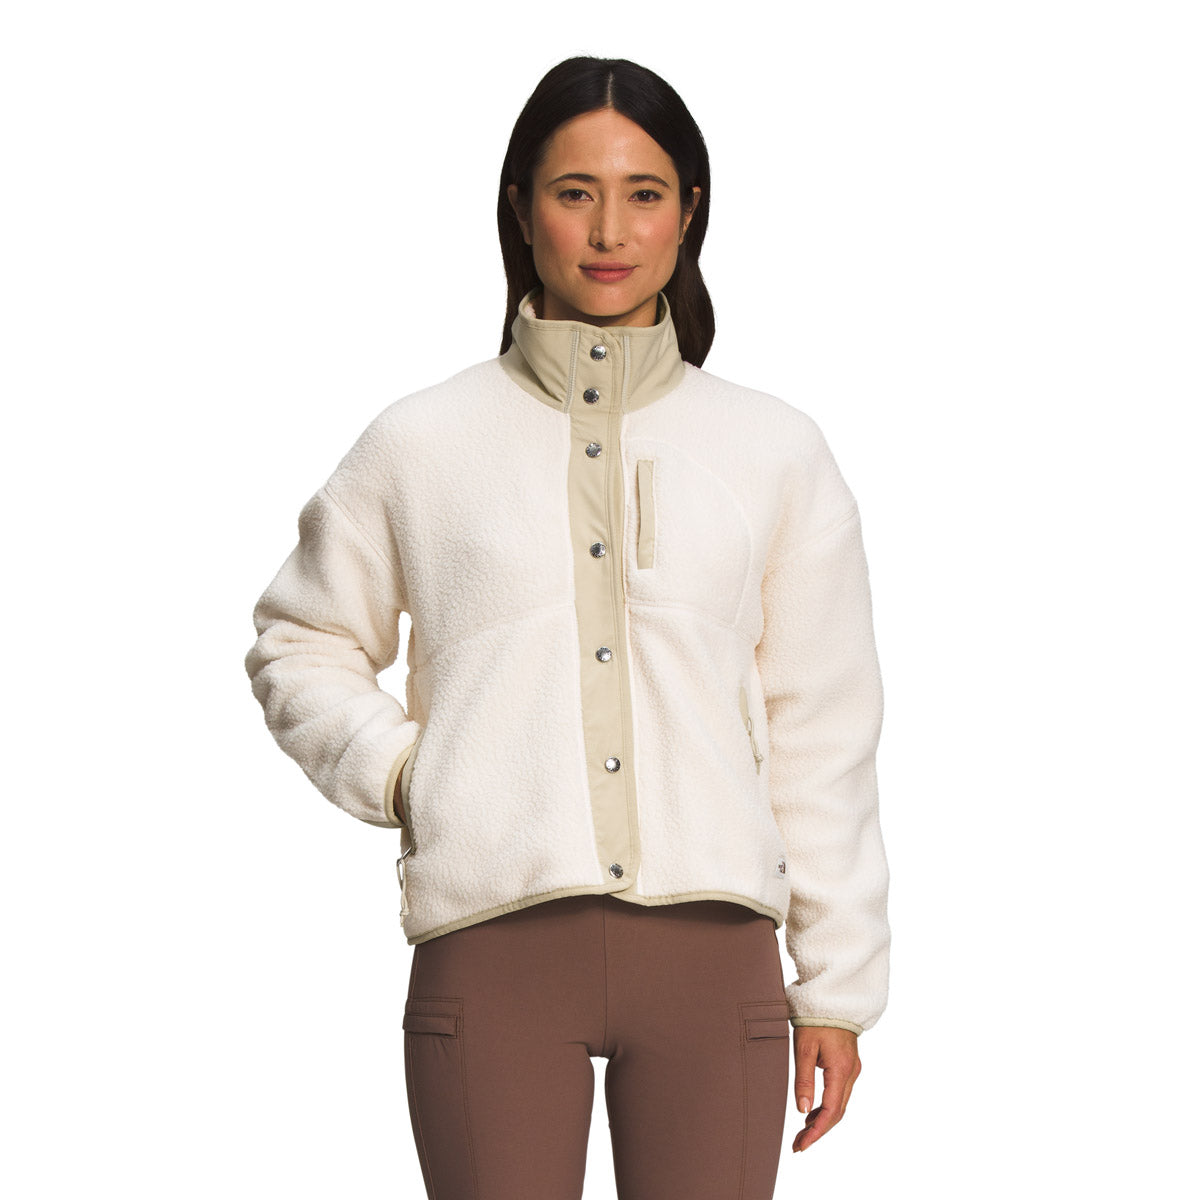 Women's Cragmont Fleece Jacket - Gearhead Outfitters